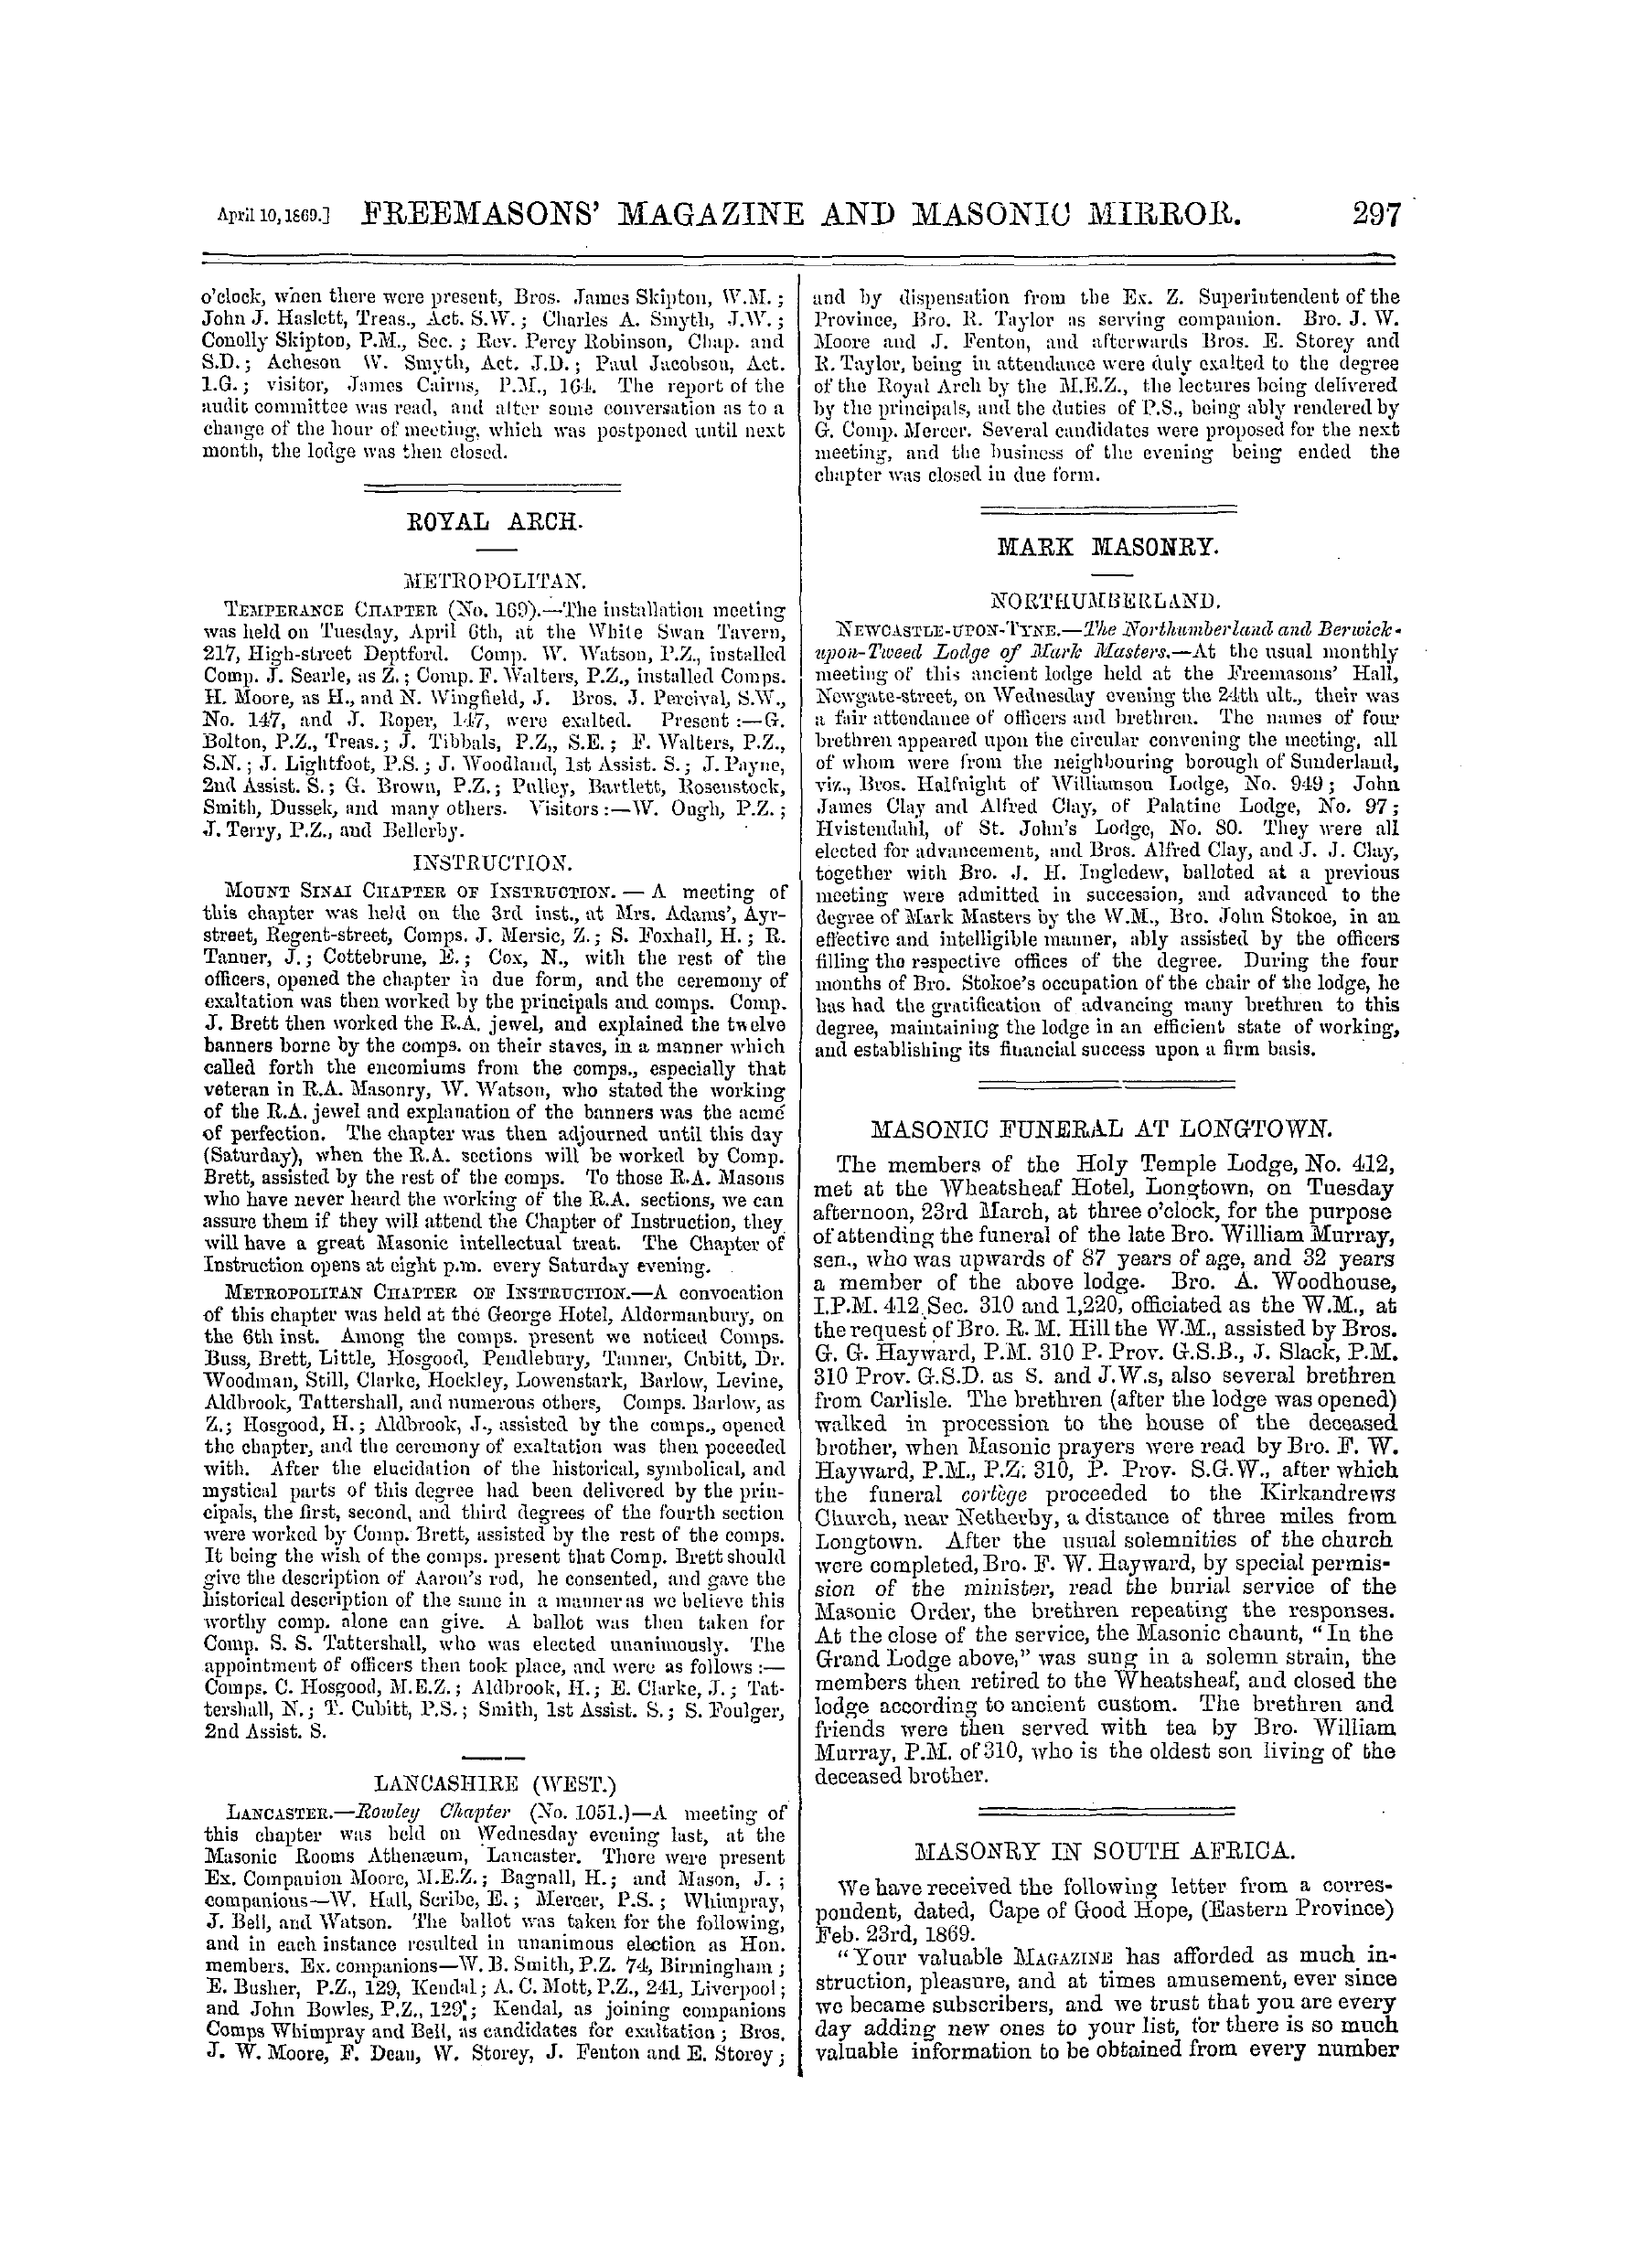 The Freemasons' Monthly Magazine: 1869-04-10 - Royal Arch.